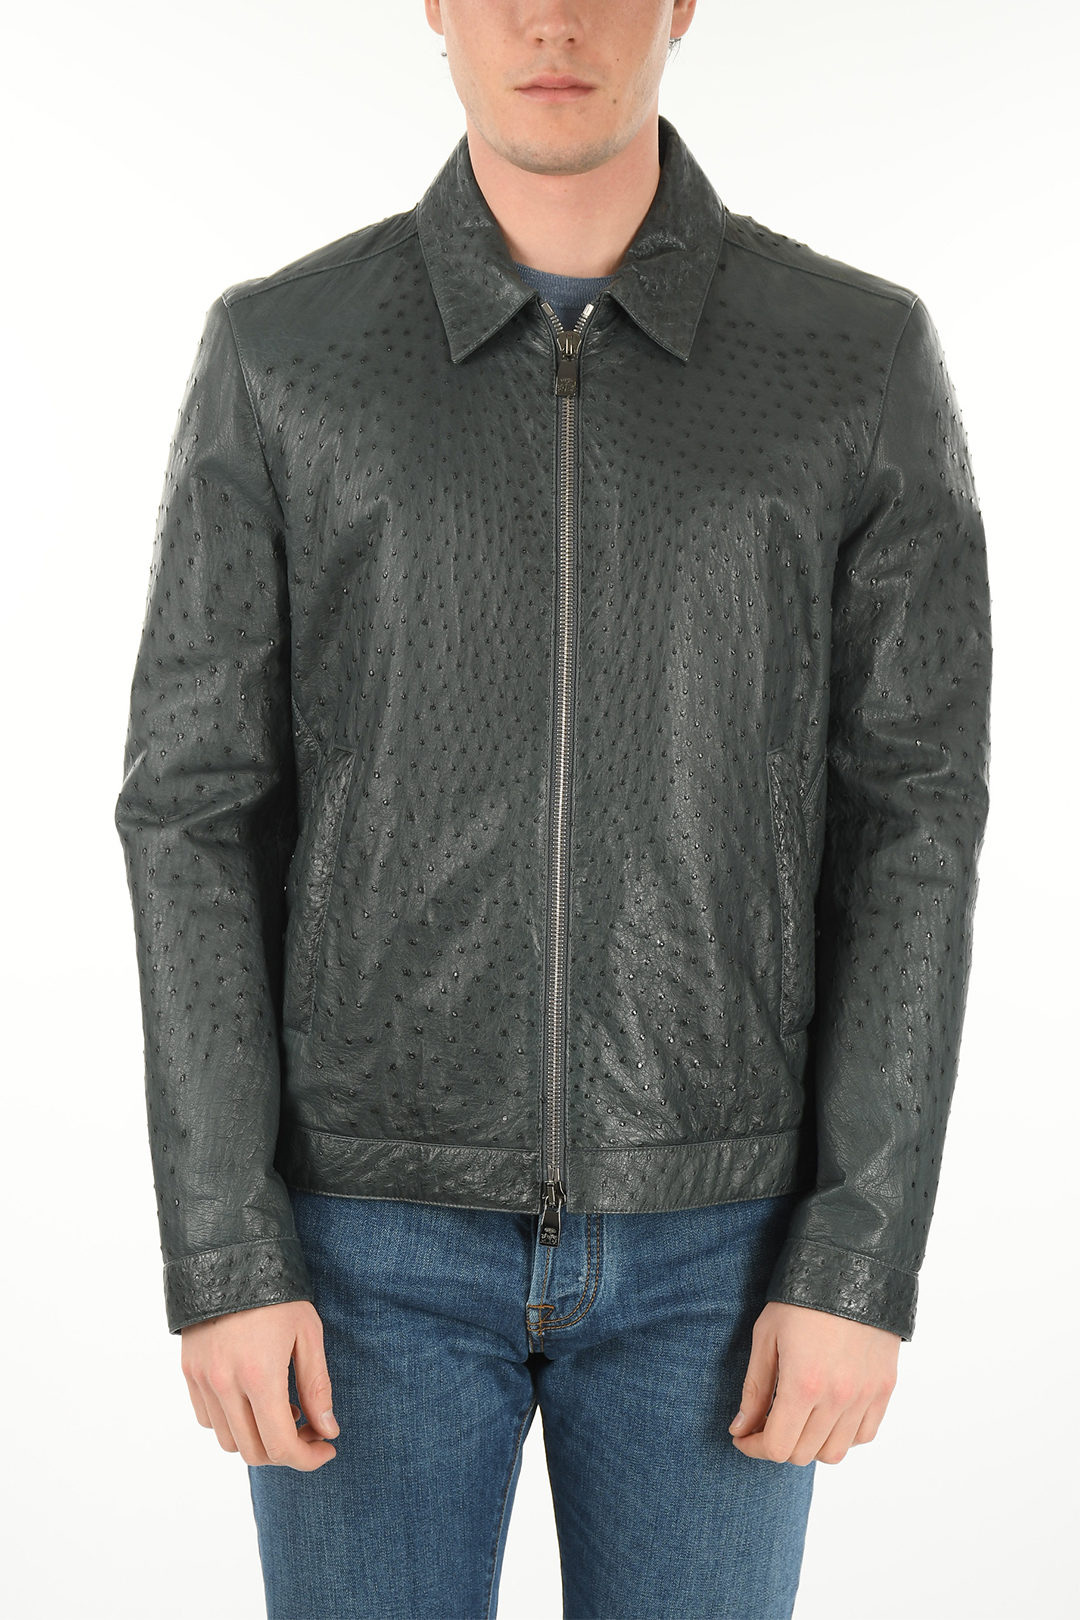 Corneliani Ostrich Leather Jacket men - Glamood Outlet